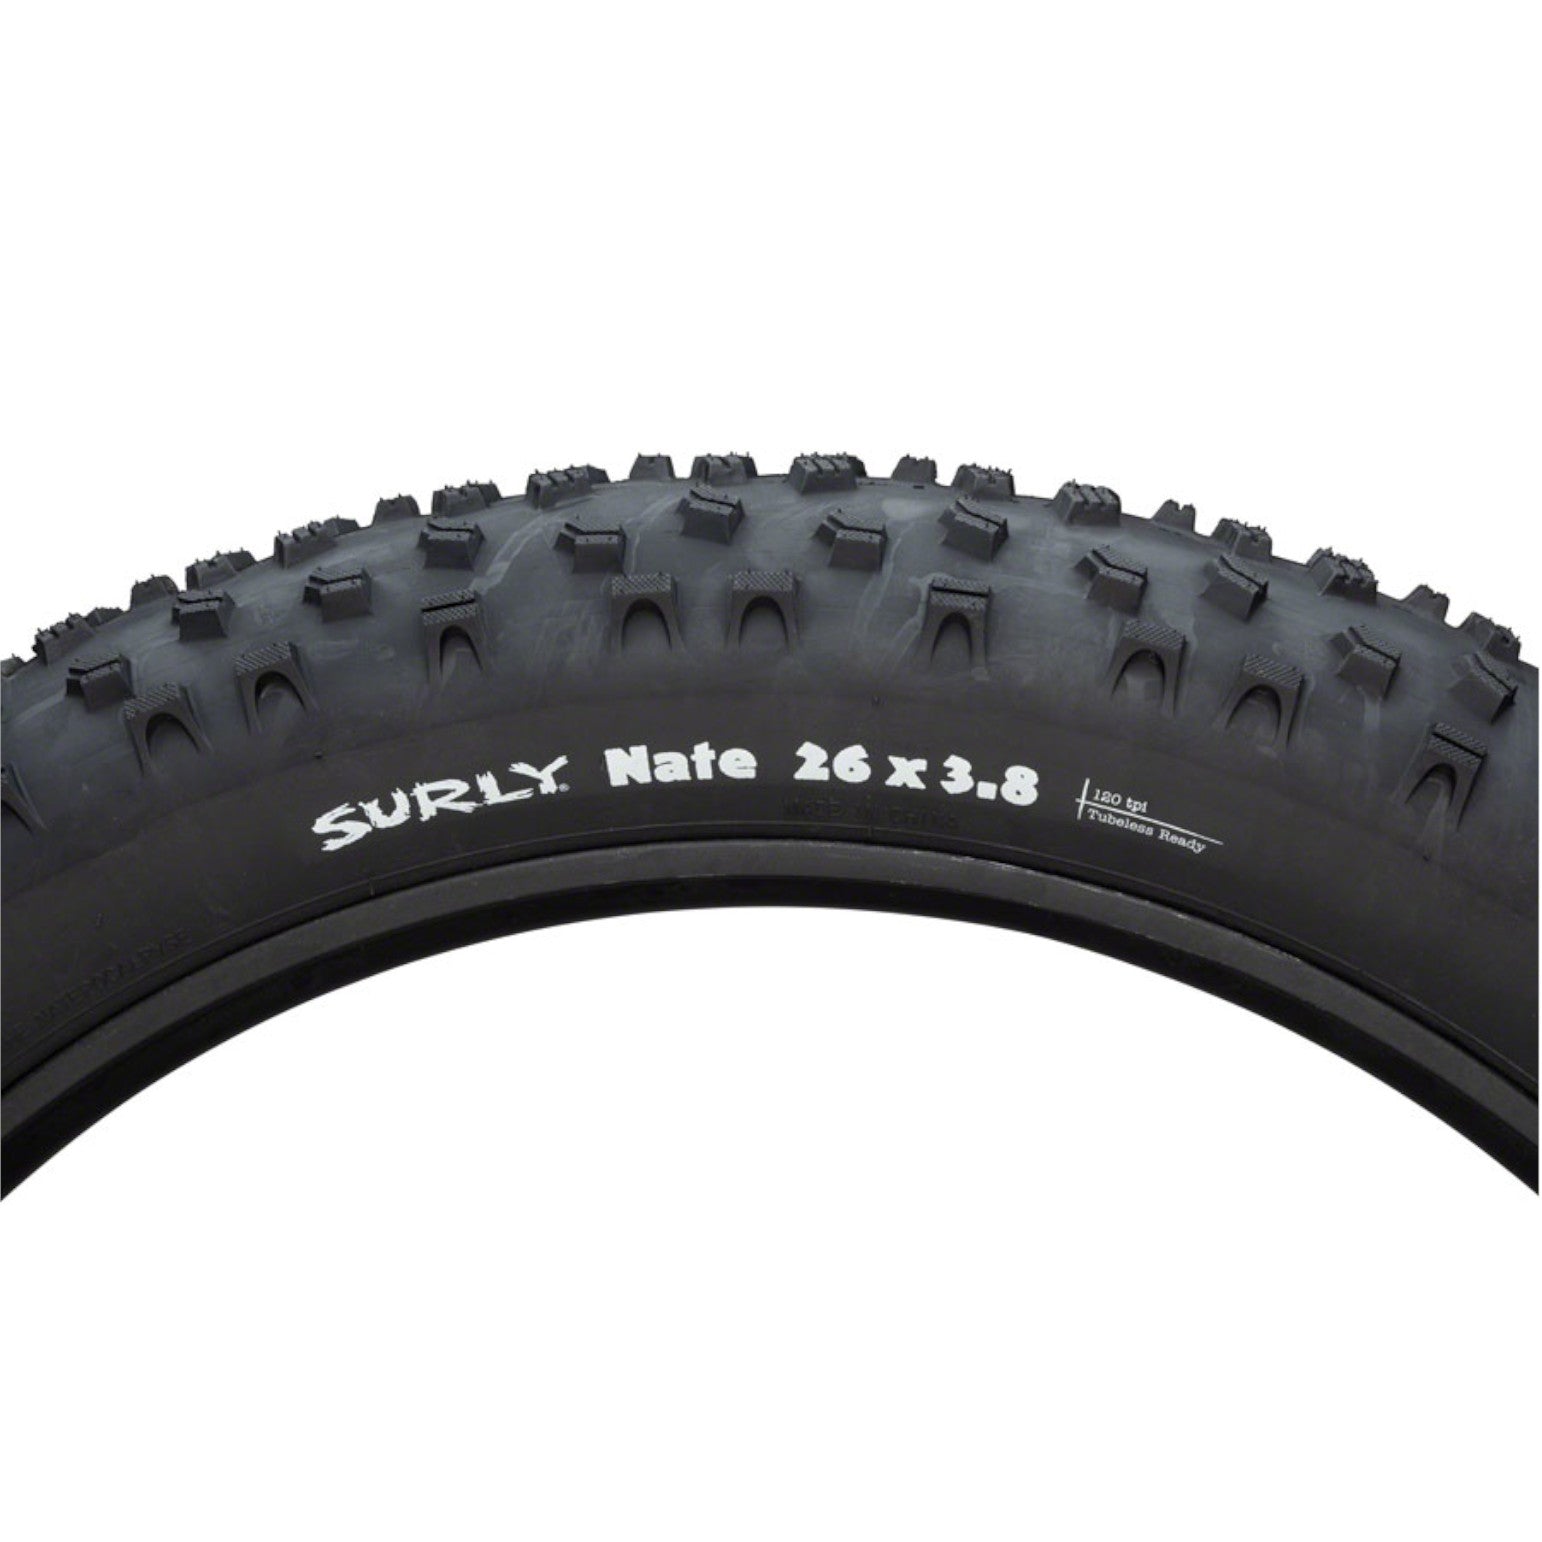 Surly Nate 26x3.8 Tubeless Folding Tire 60tpi